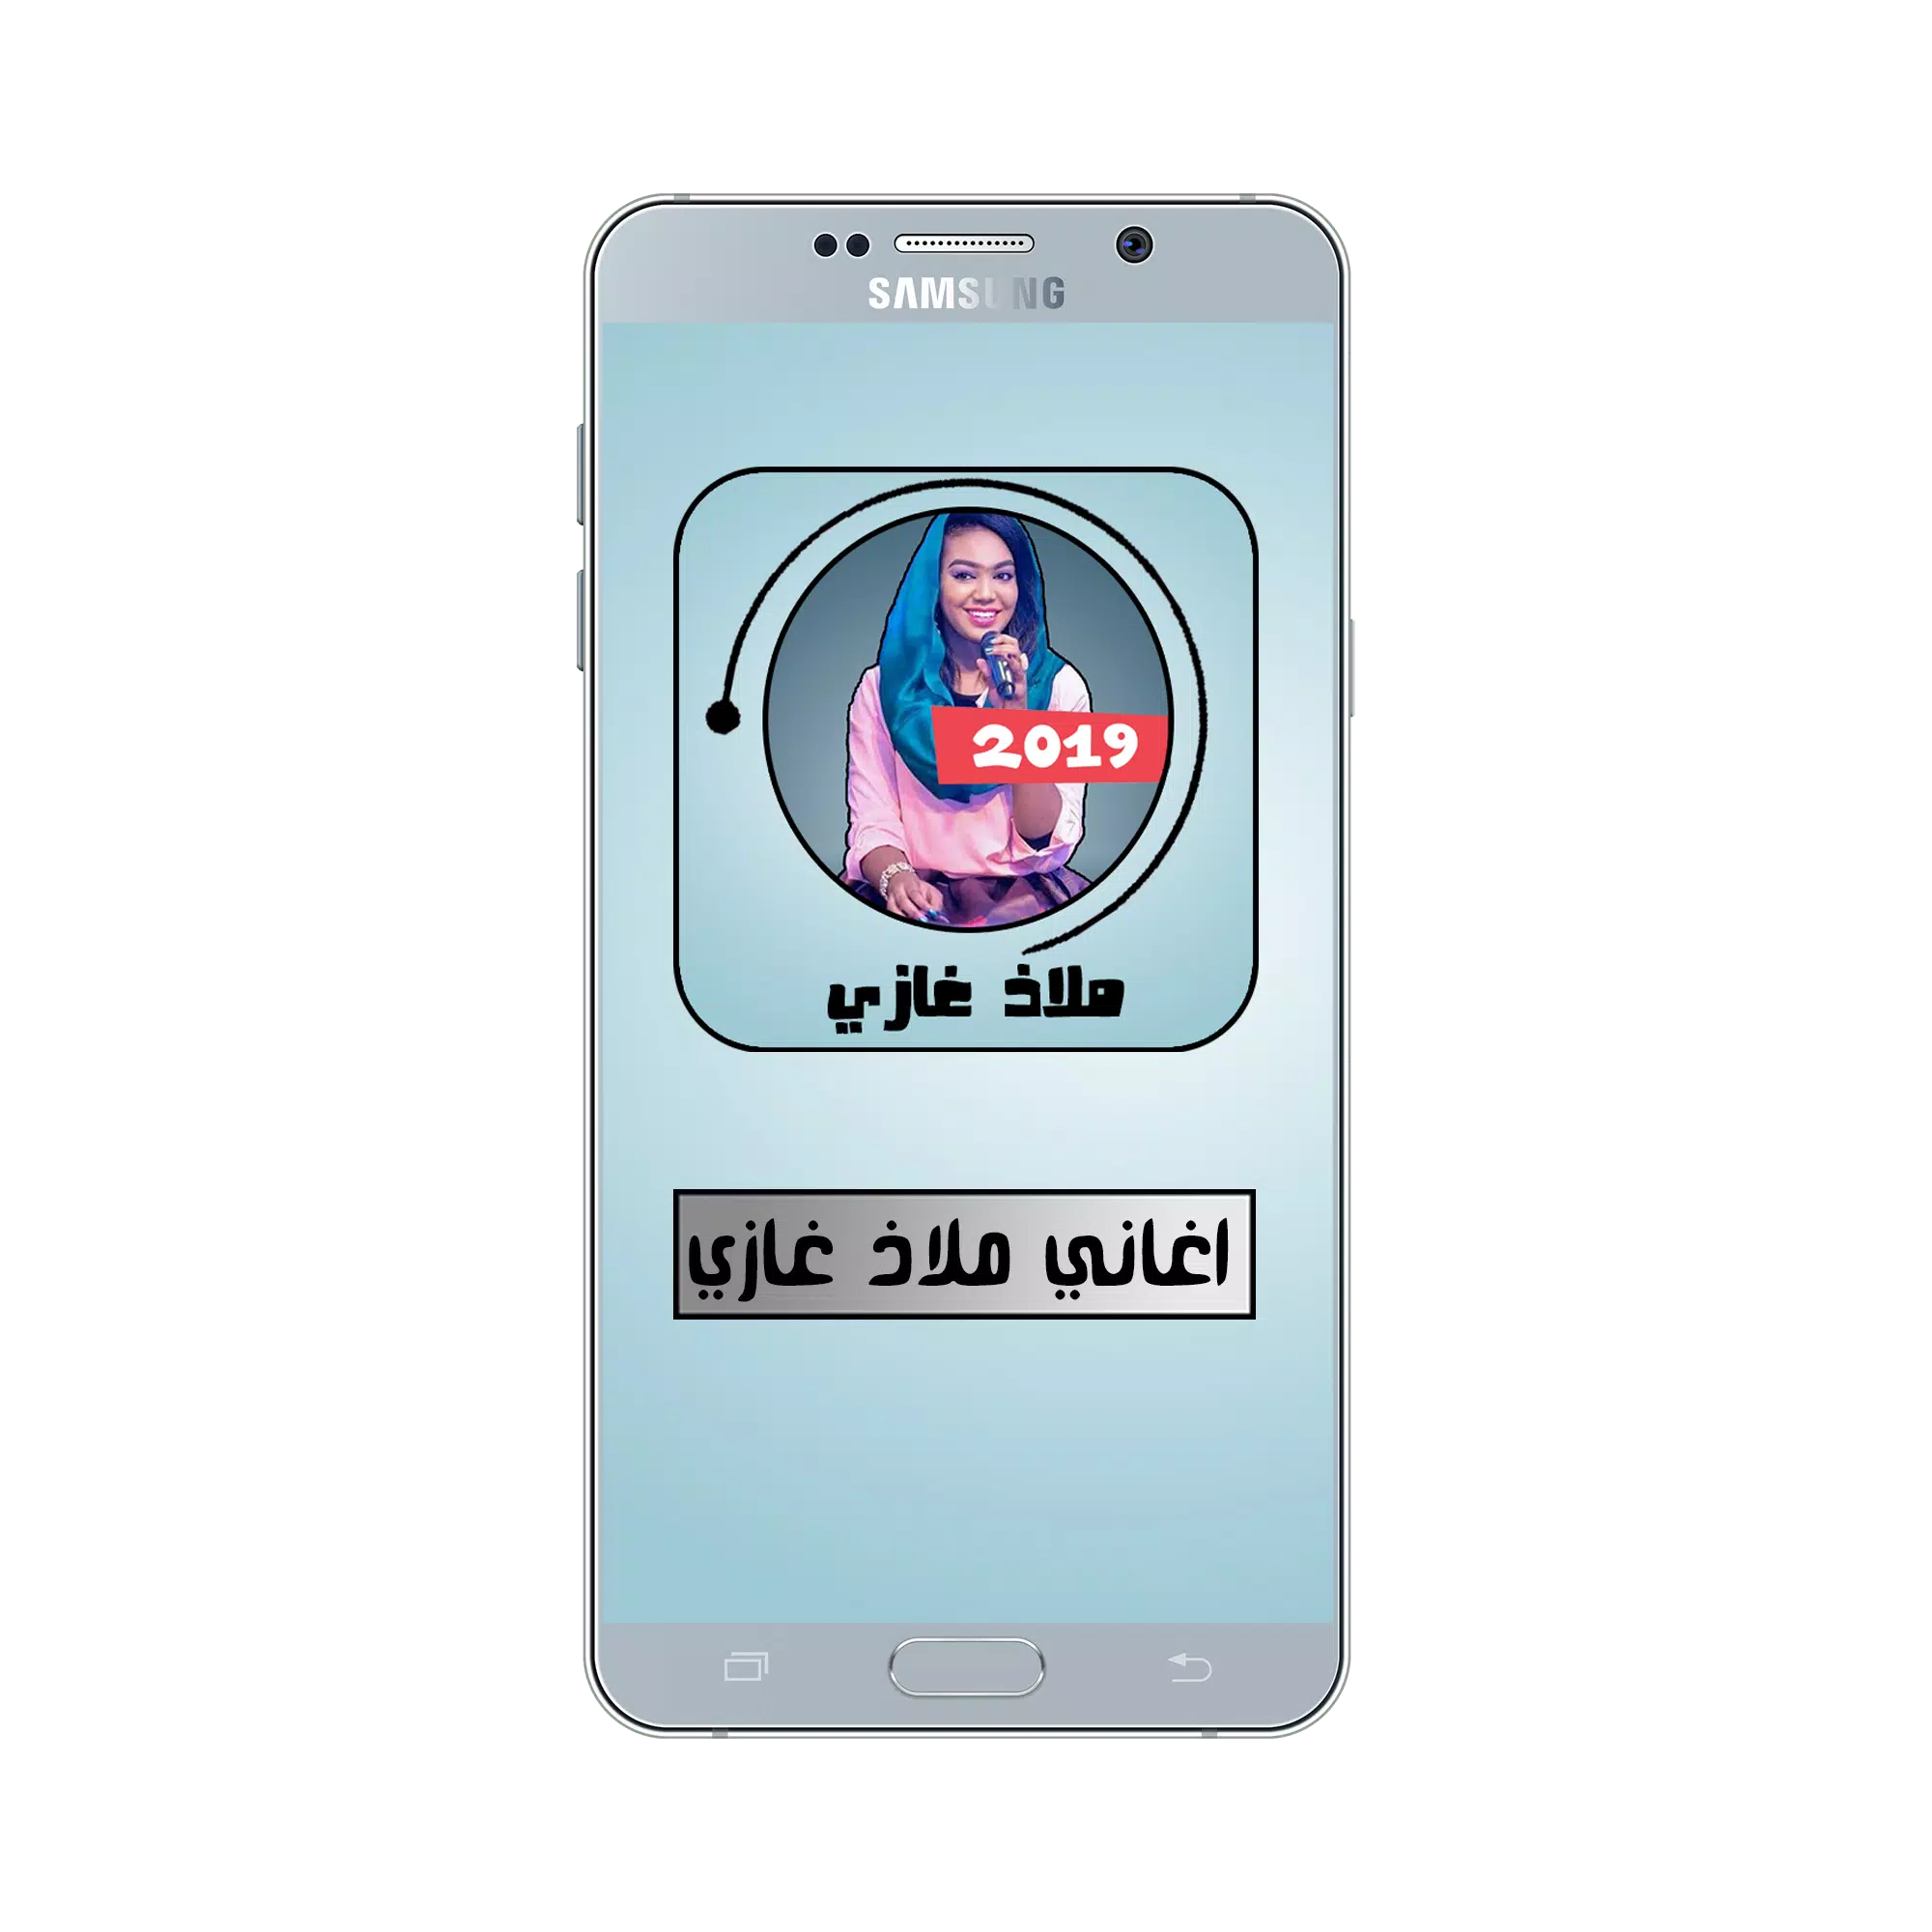 أغاني ملاذ غازي بدون نت - أغاني سودانية for Android - APK Download